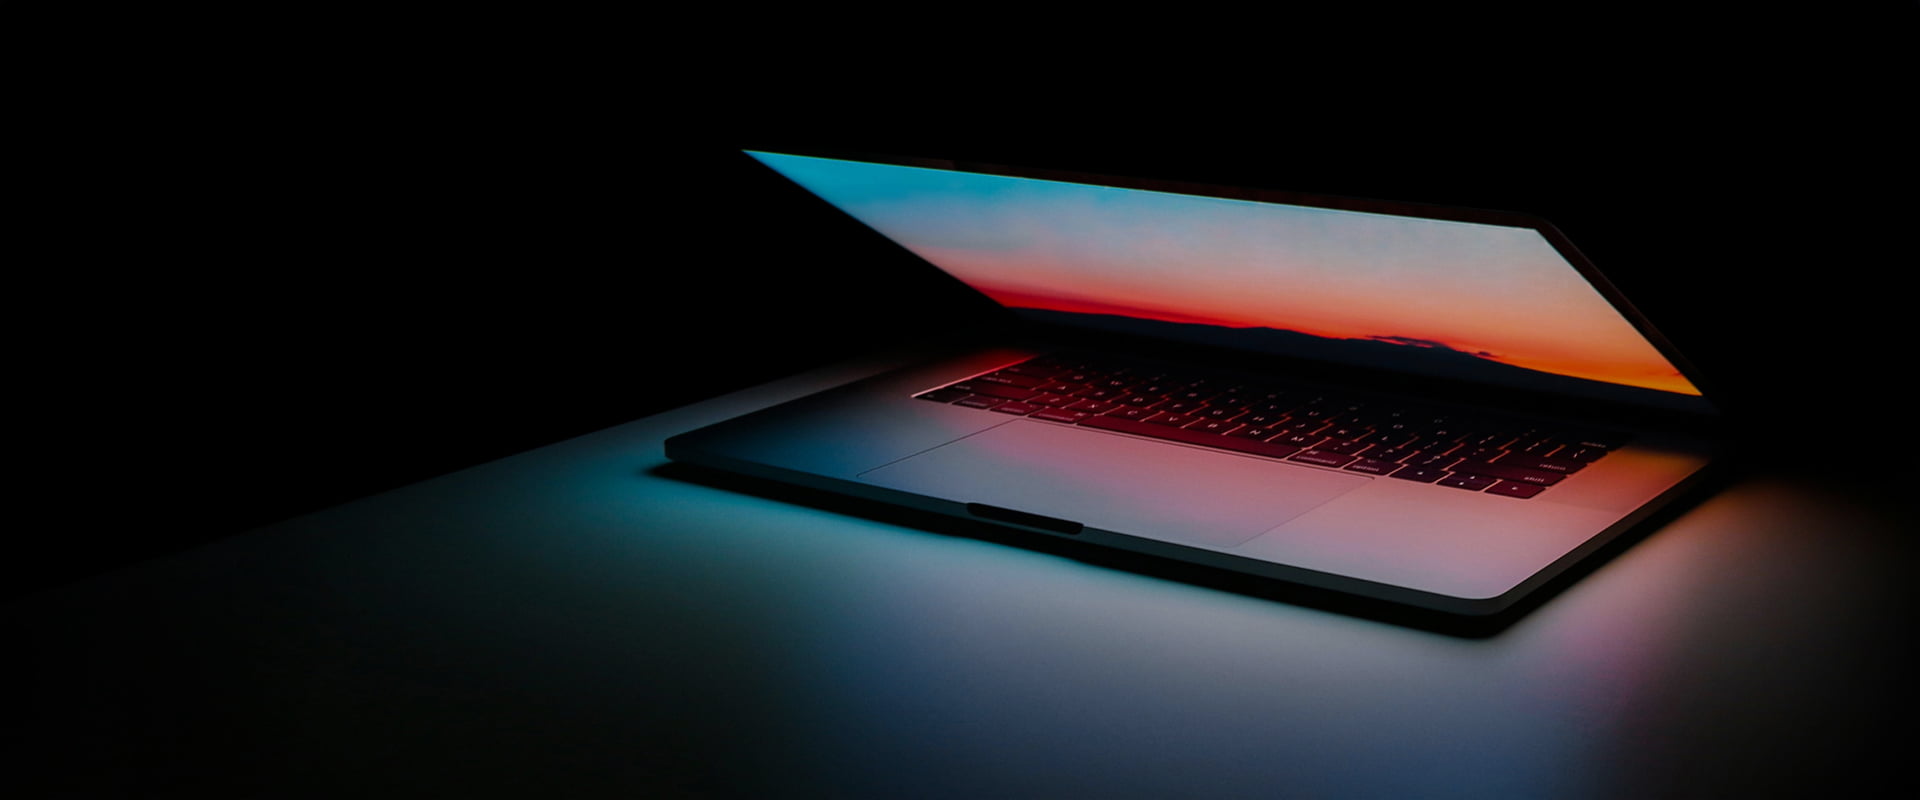 A half-opened MacBook in the dark on a white desk